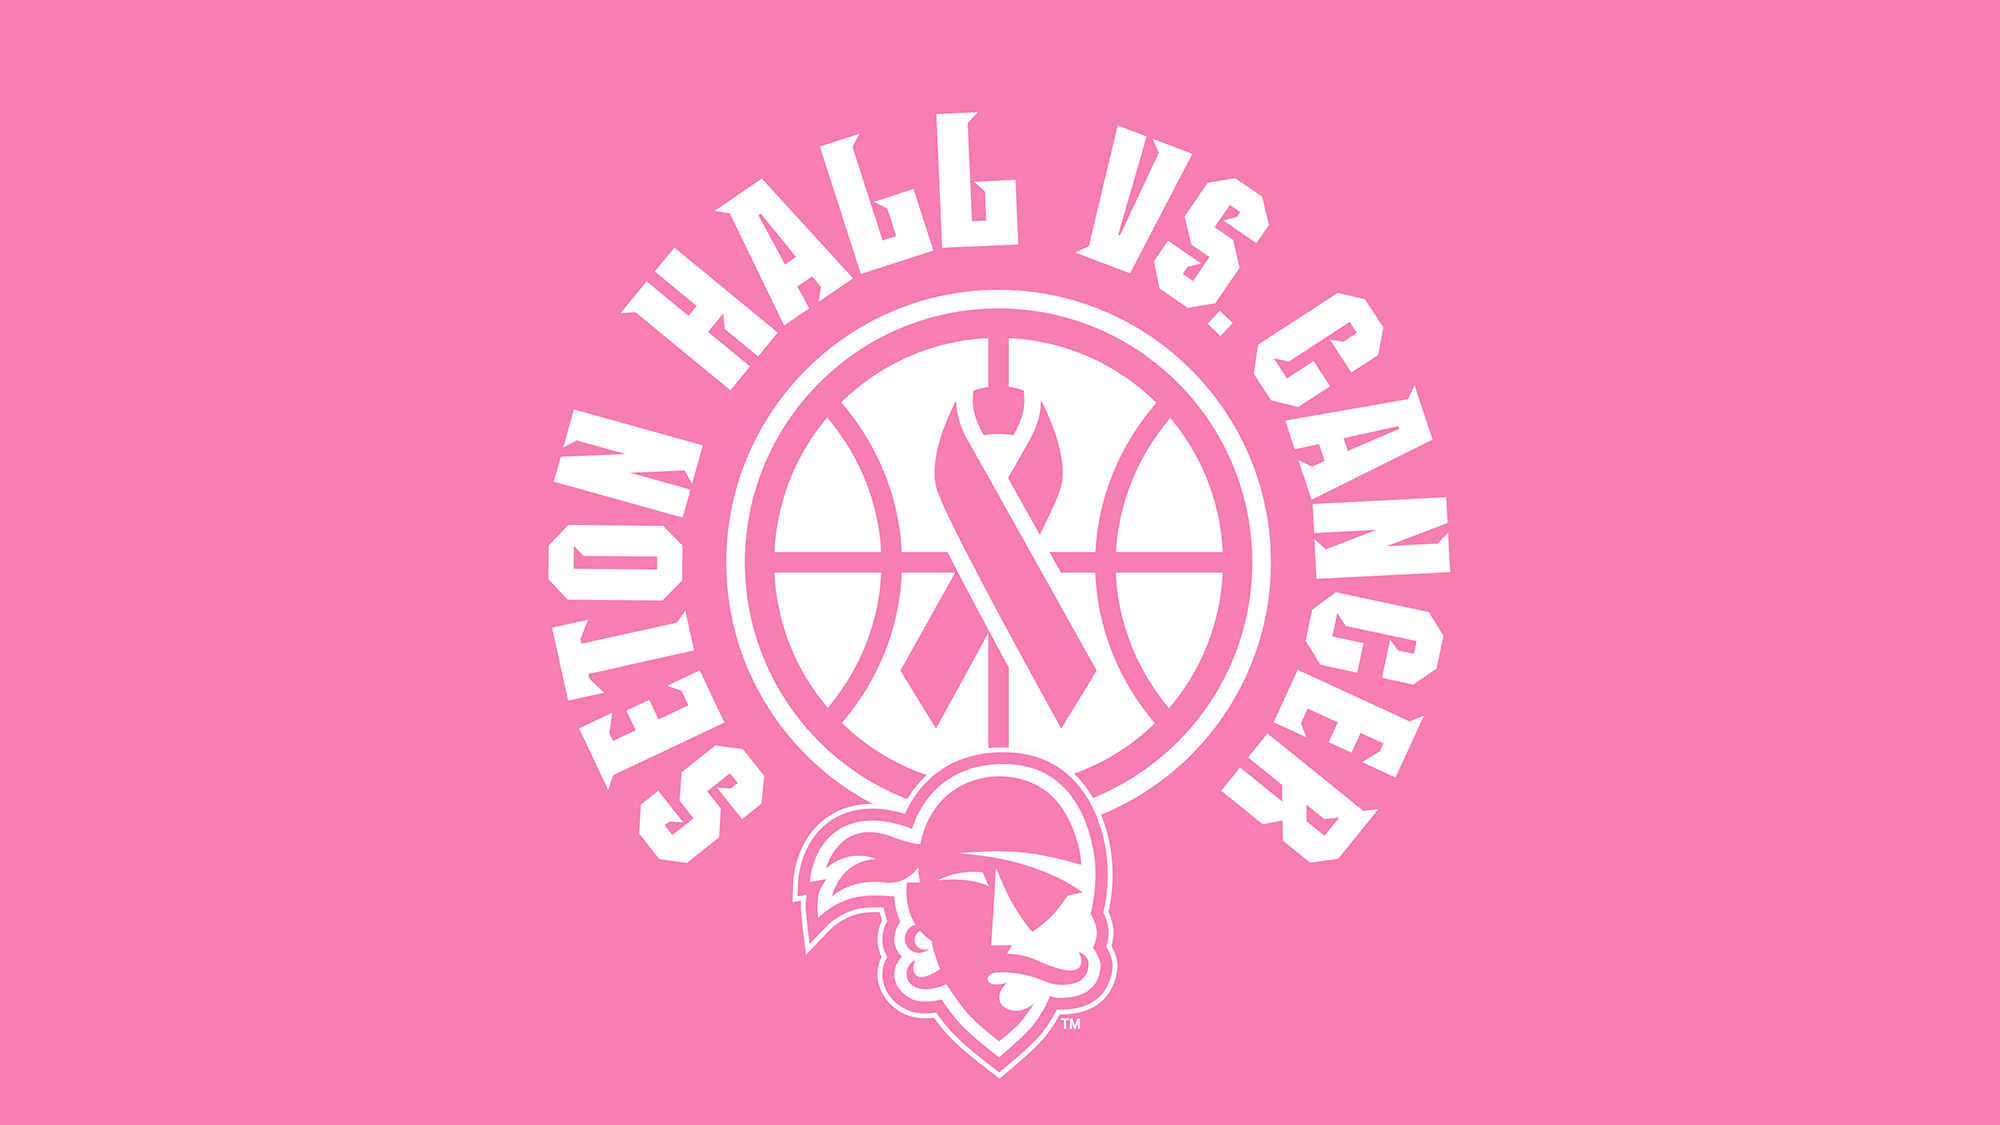 Seton Hall vs. Cancer Logo